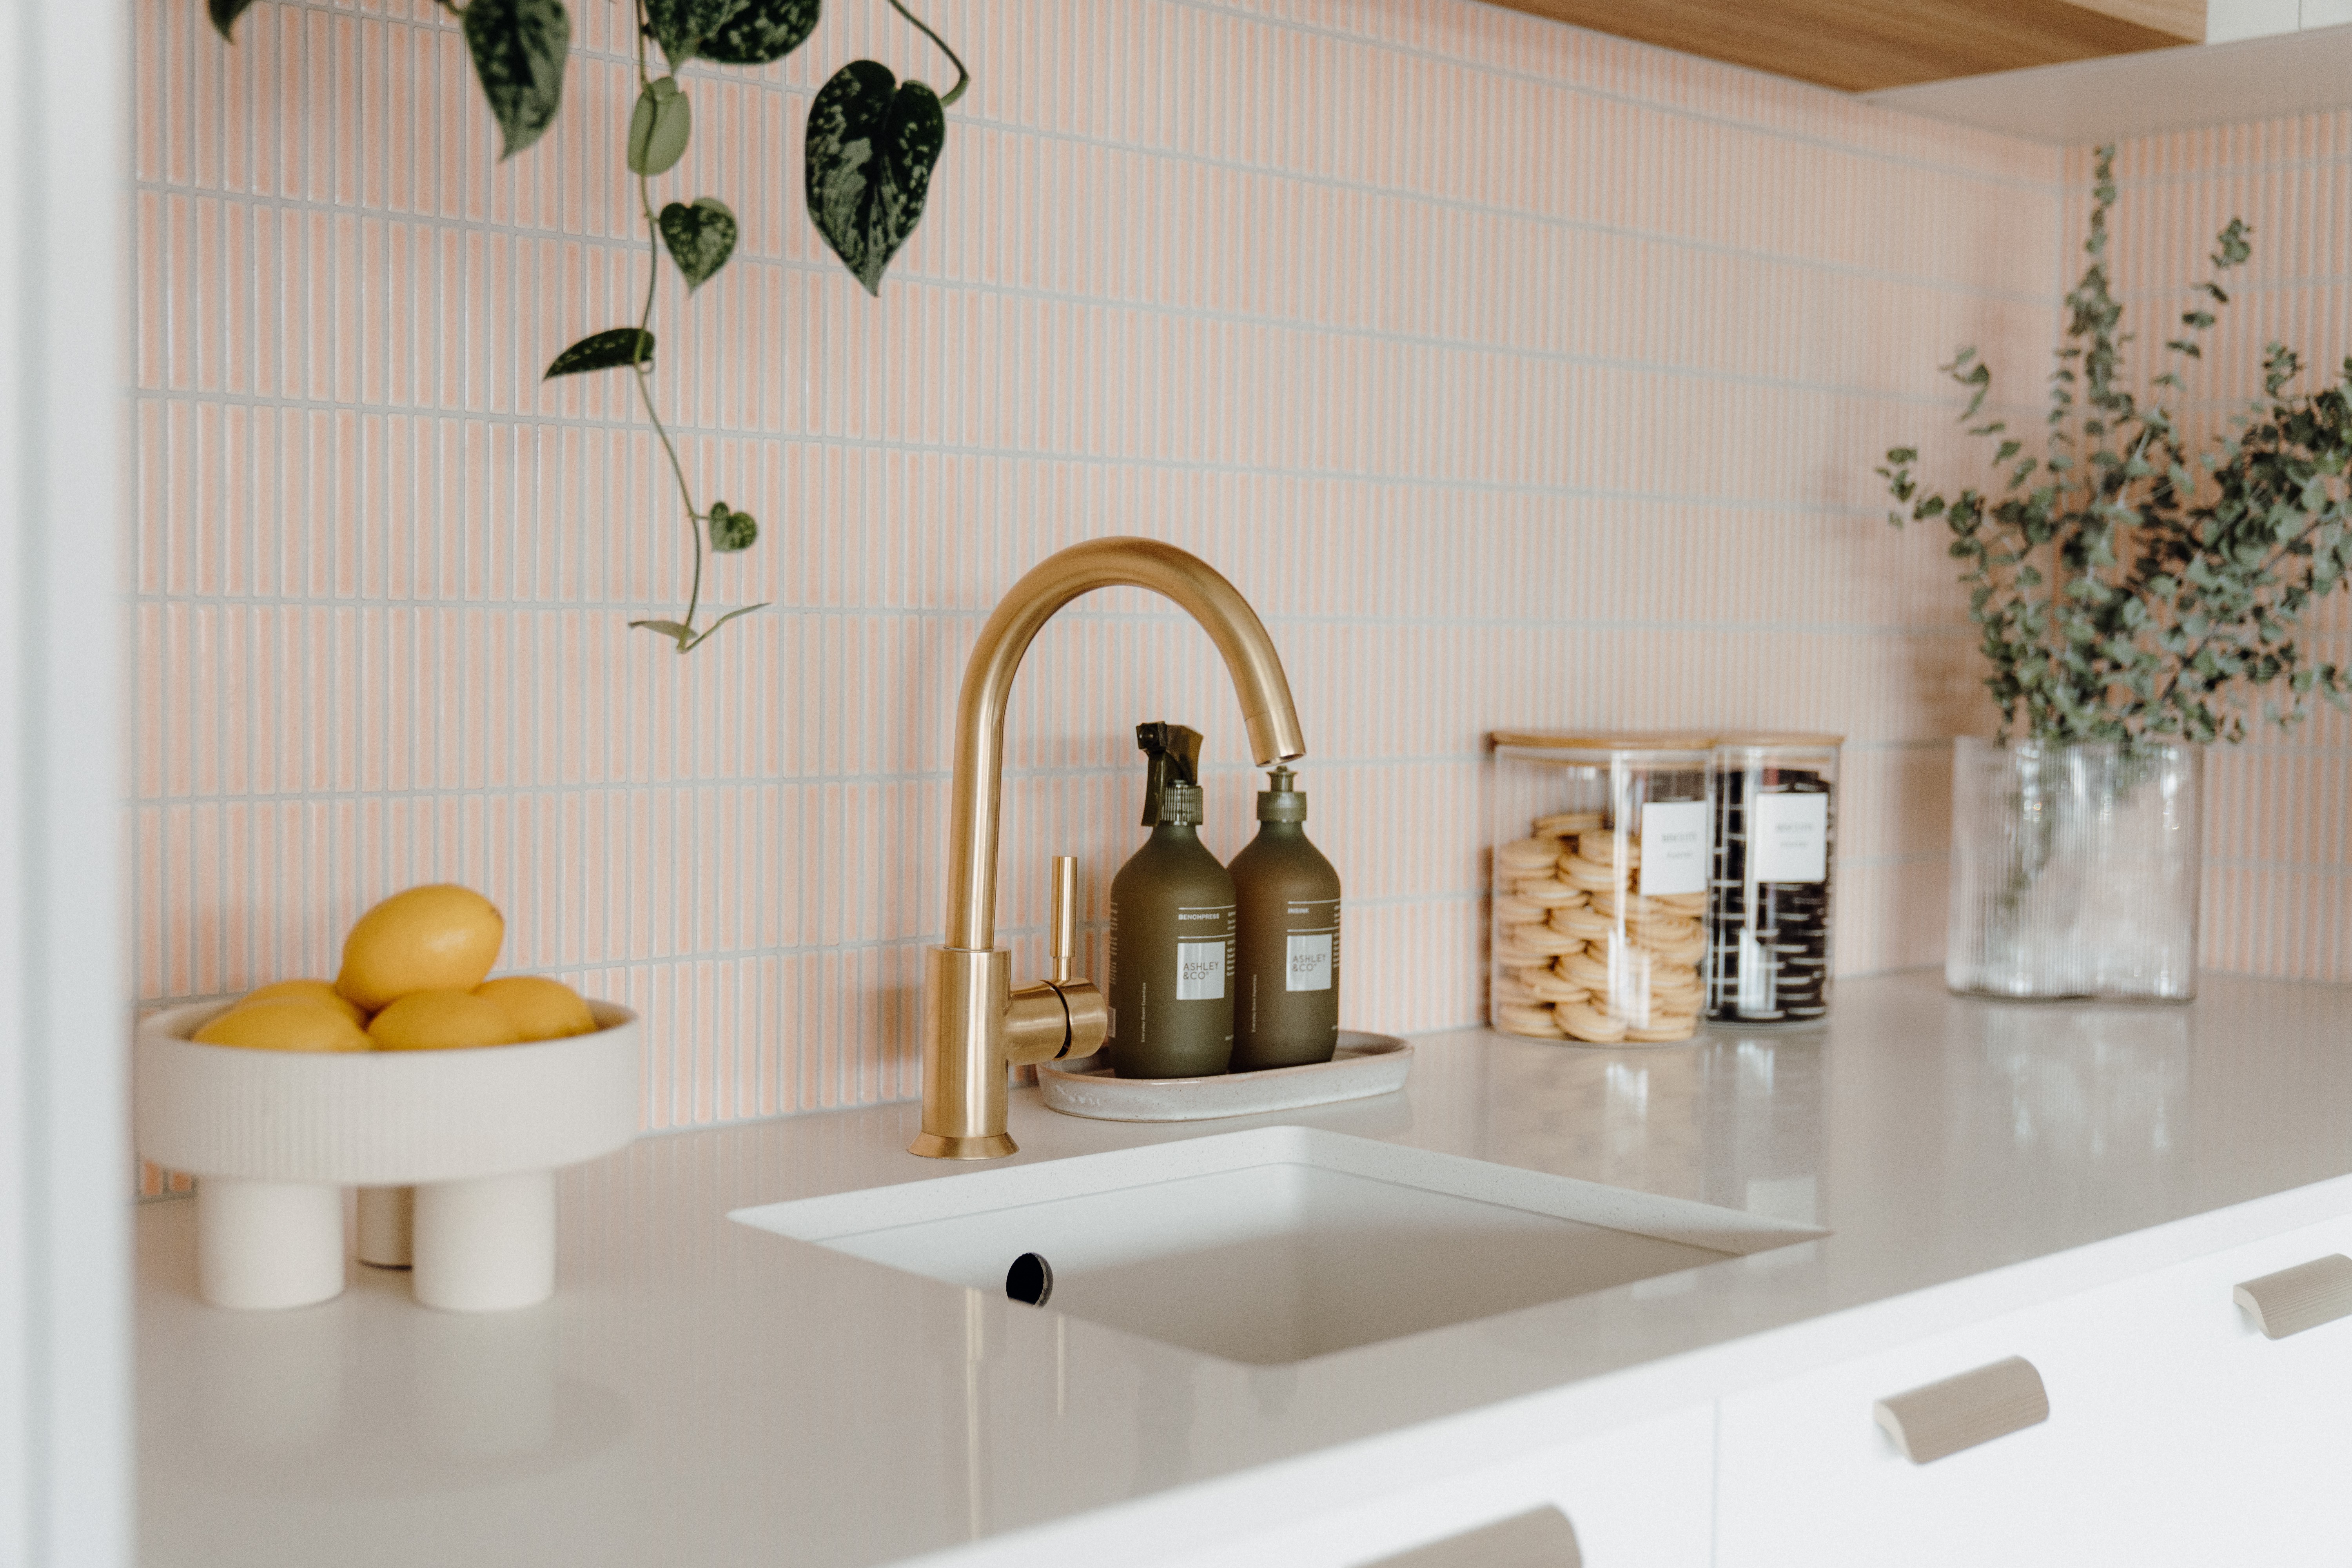 8 of the best kitchen splashback ideas for nz homes - tile space